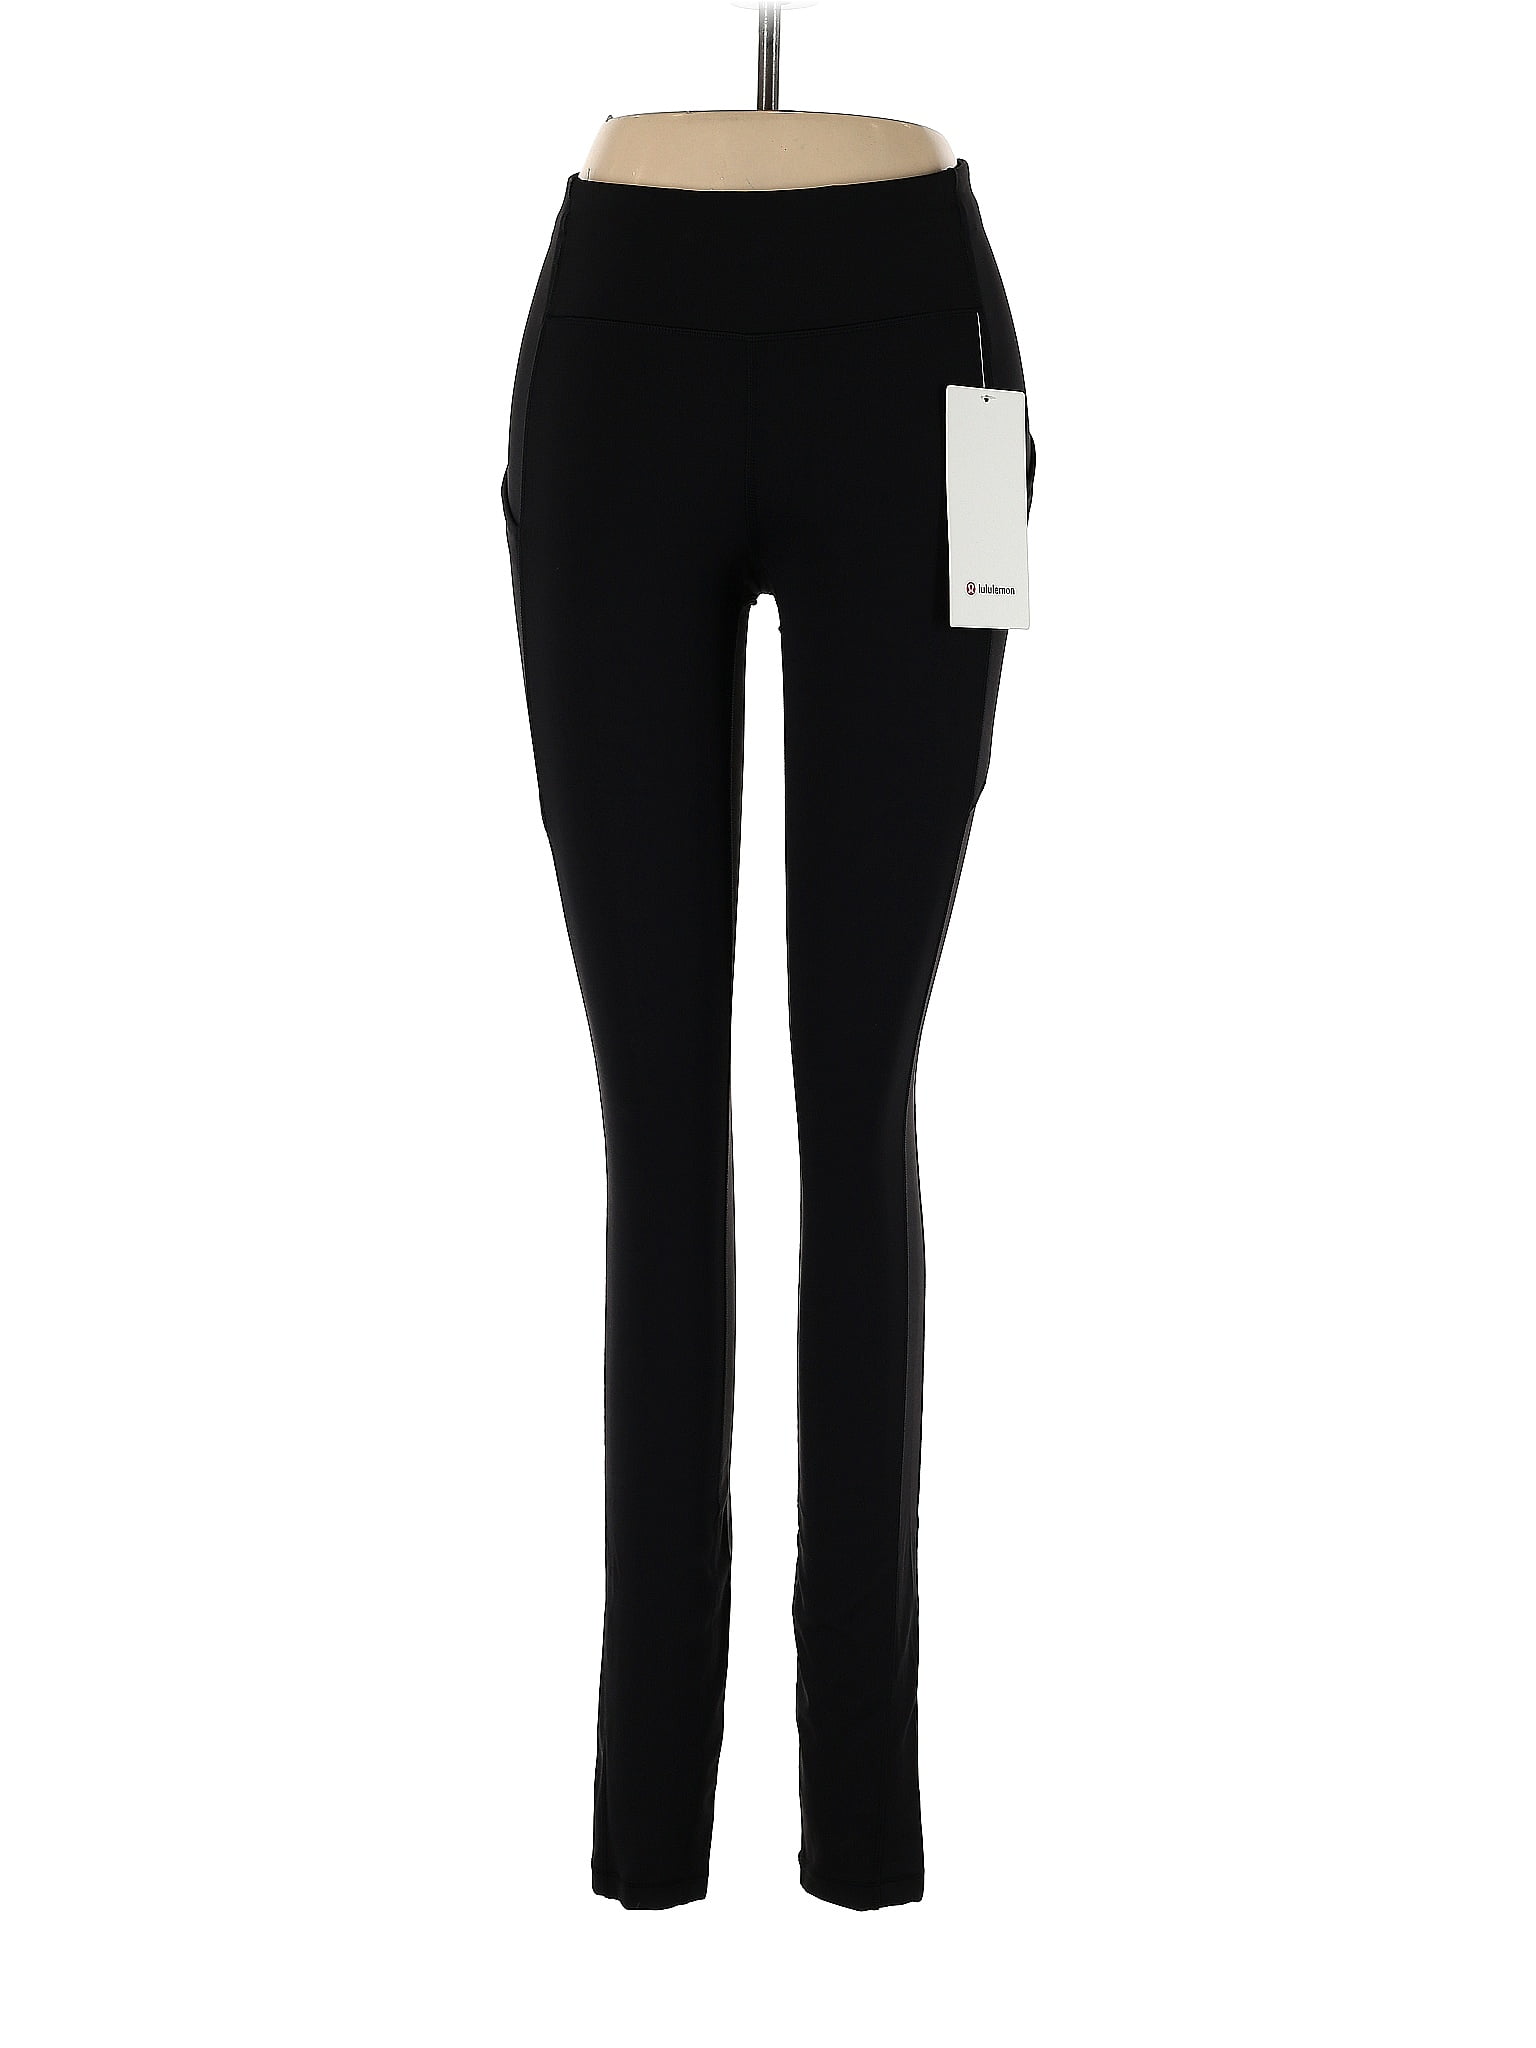 Lululemon Athletica Black Active Pants Size 4 (Tall) - 54% off